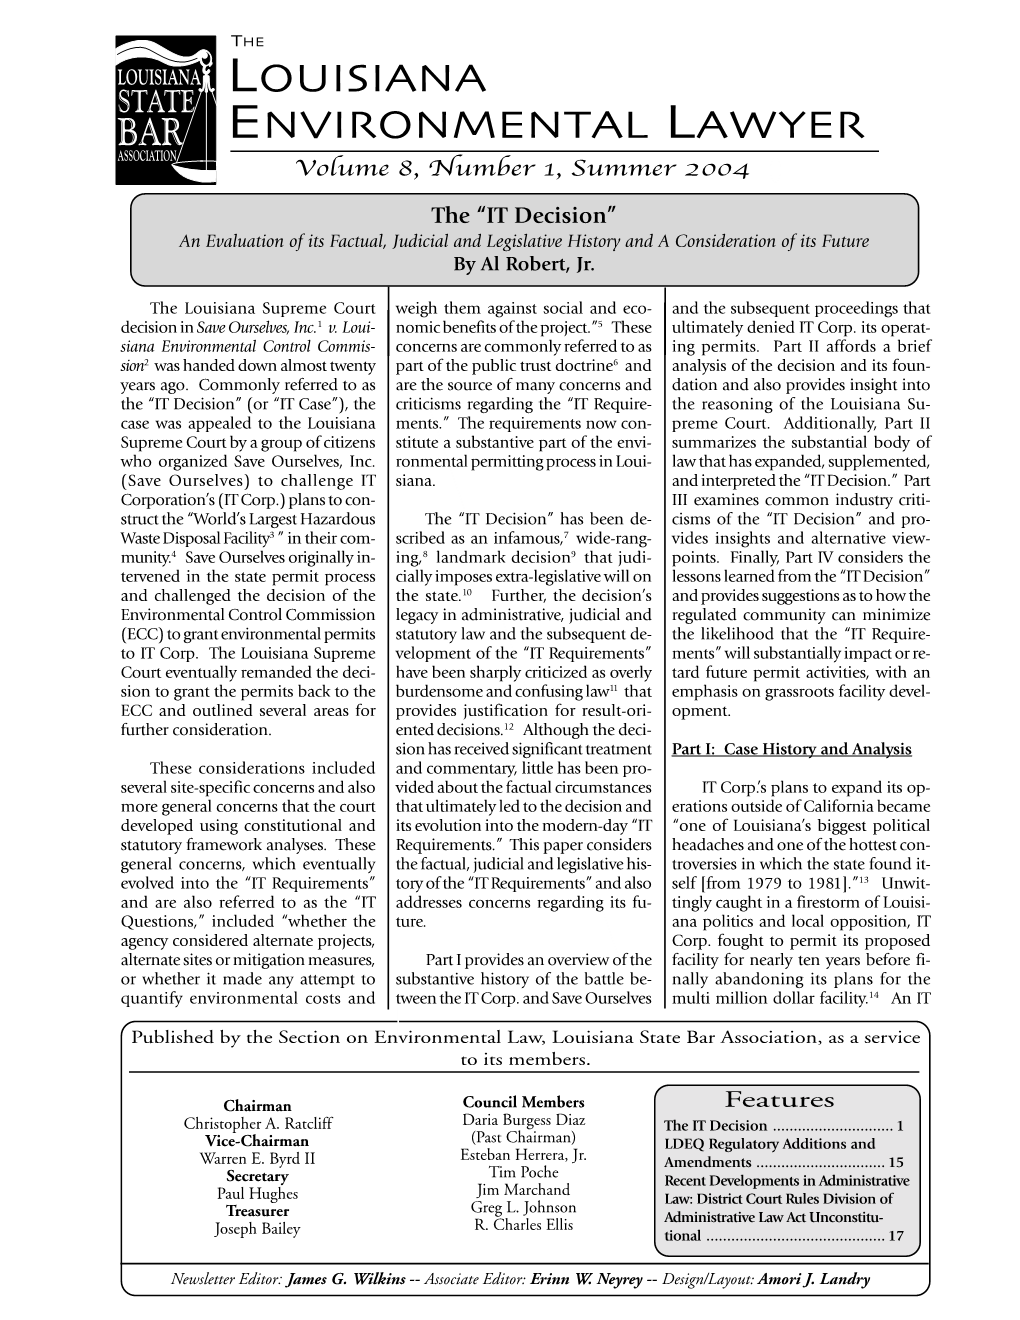 Louisiana Environmental Lawyer, Vol 8, No 1, Spring 2004